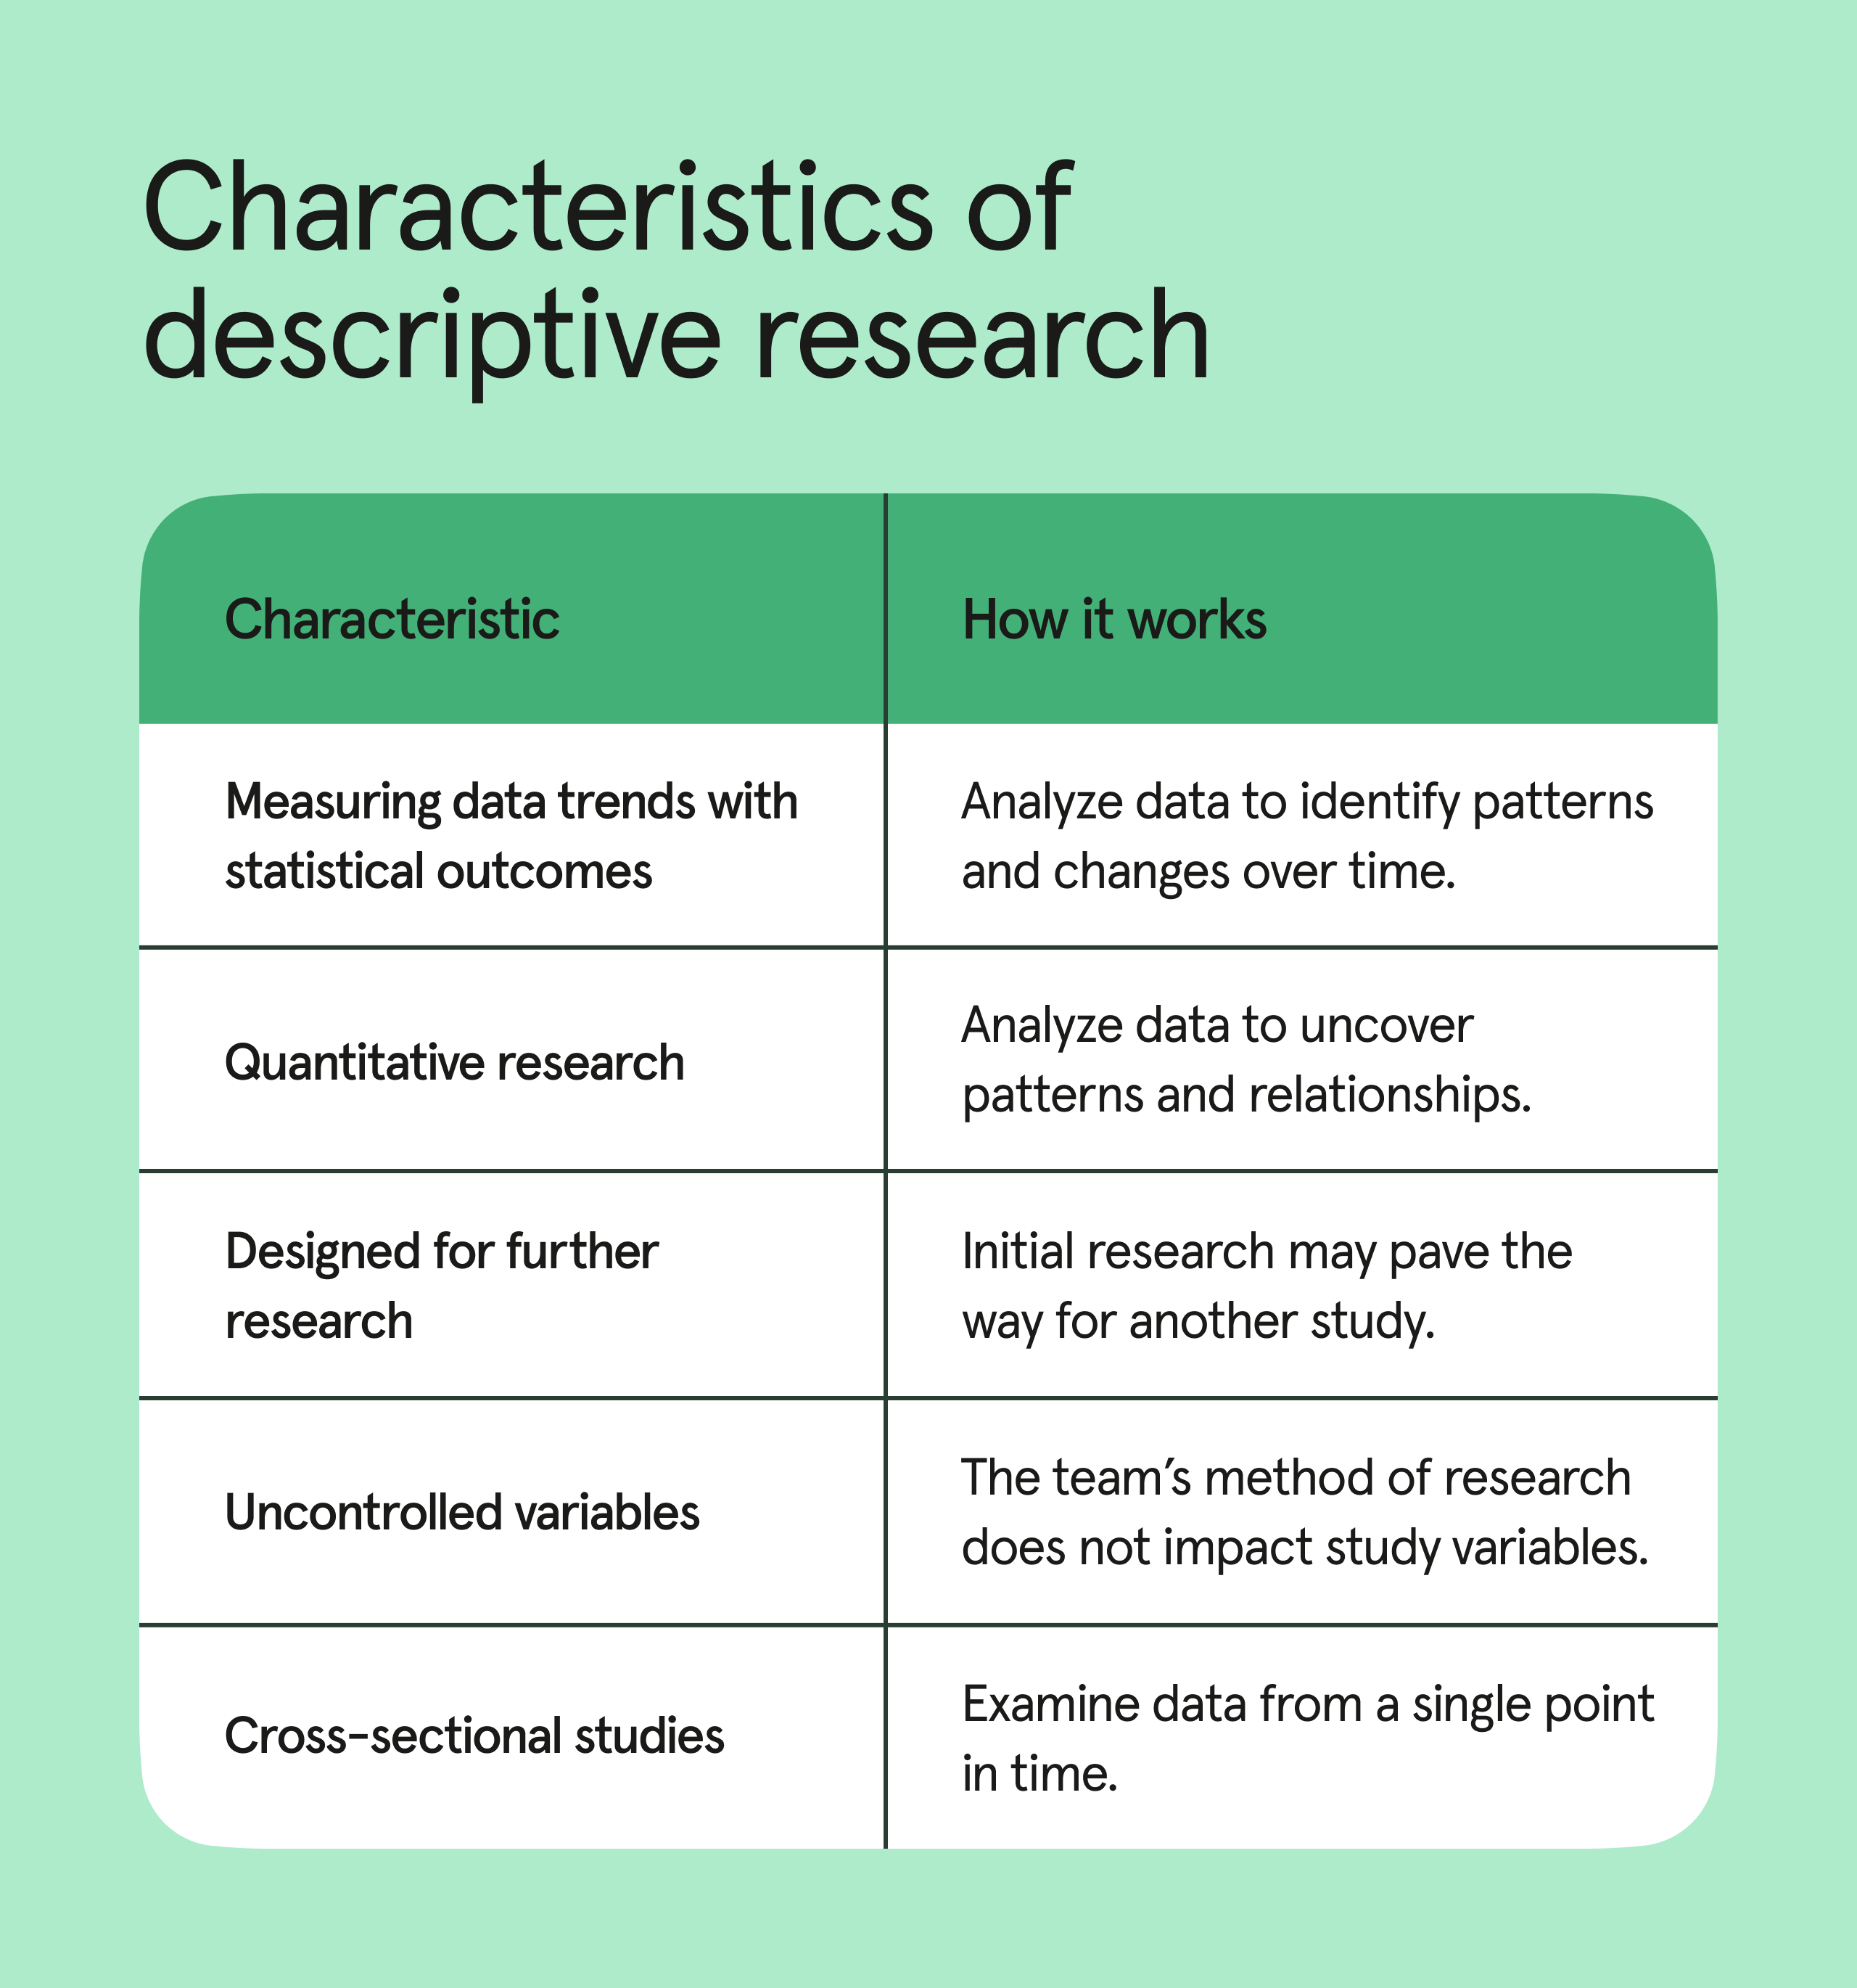 a list of characteristics often present in descriptive research 